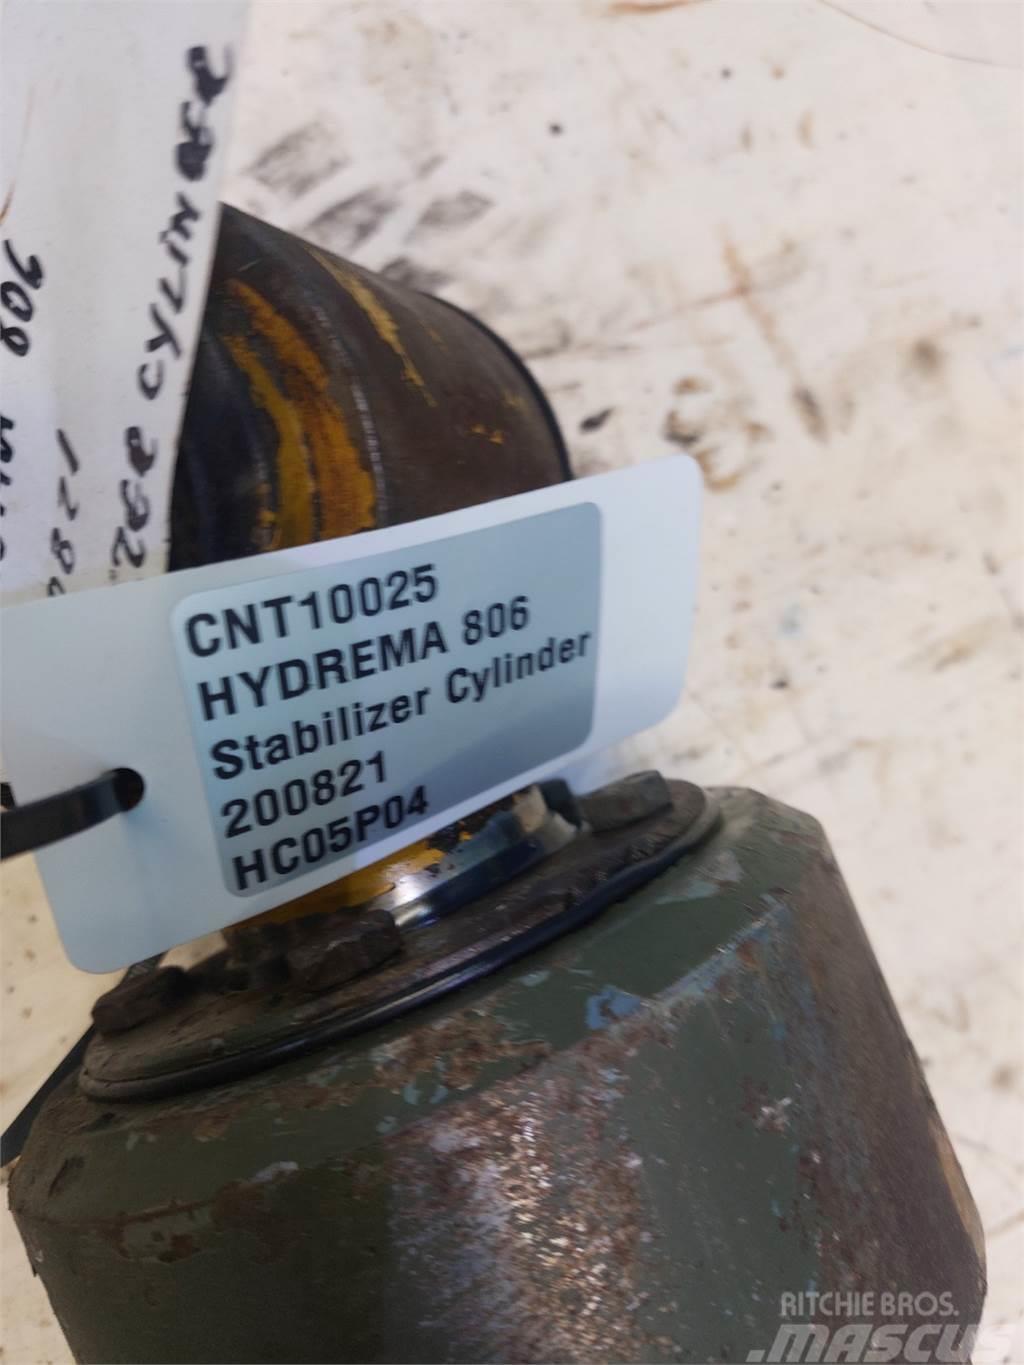 Hydrema 806 Andre komponenter